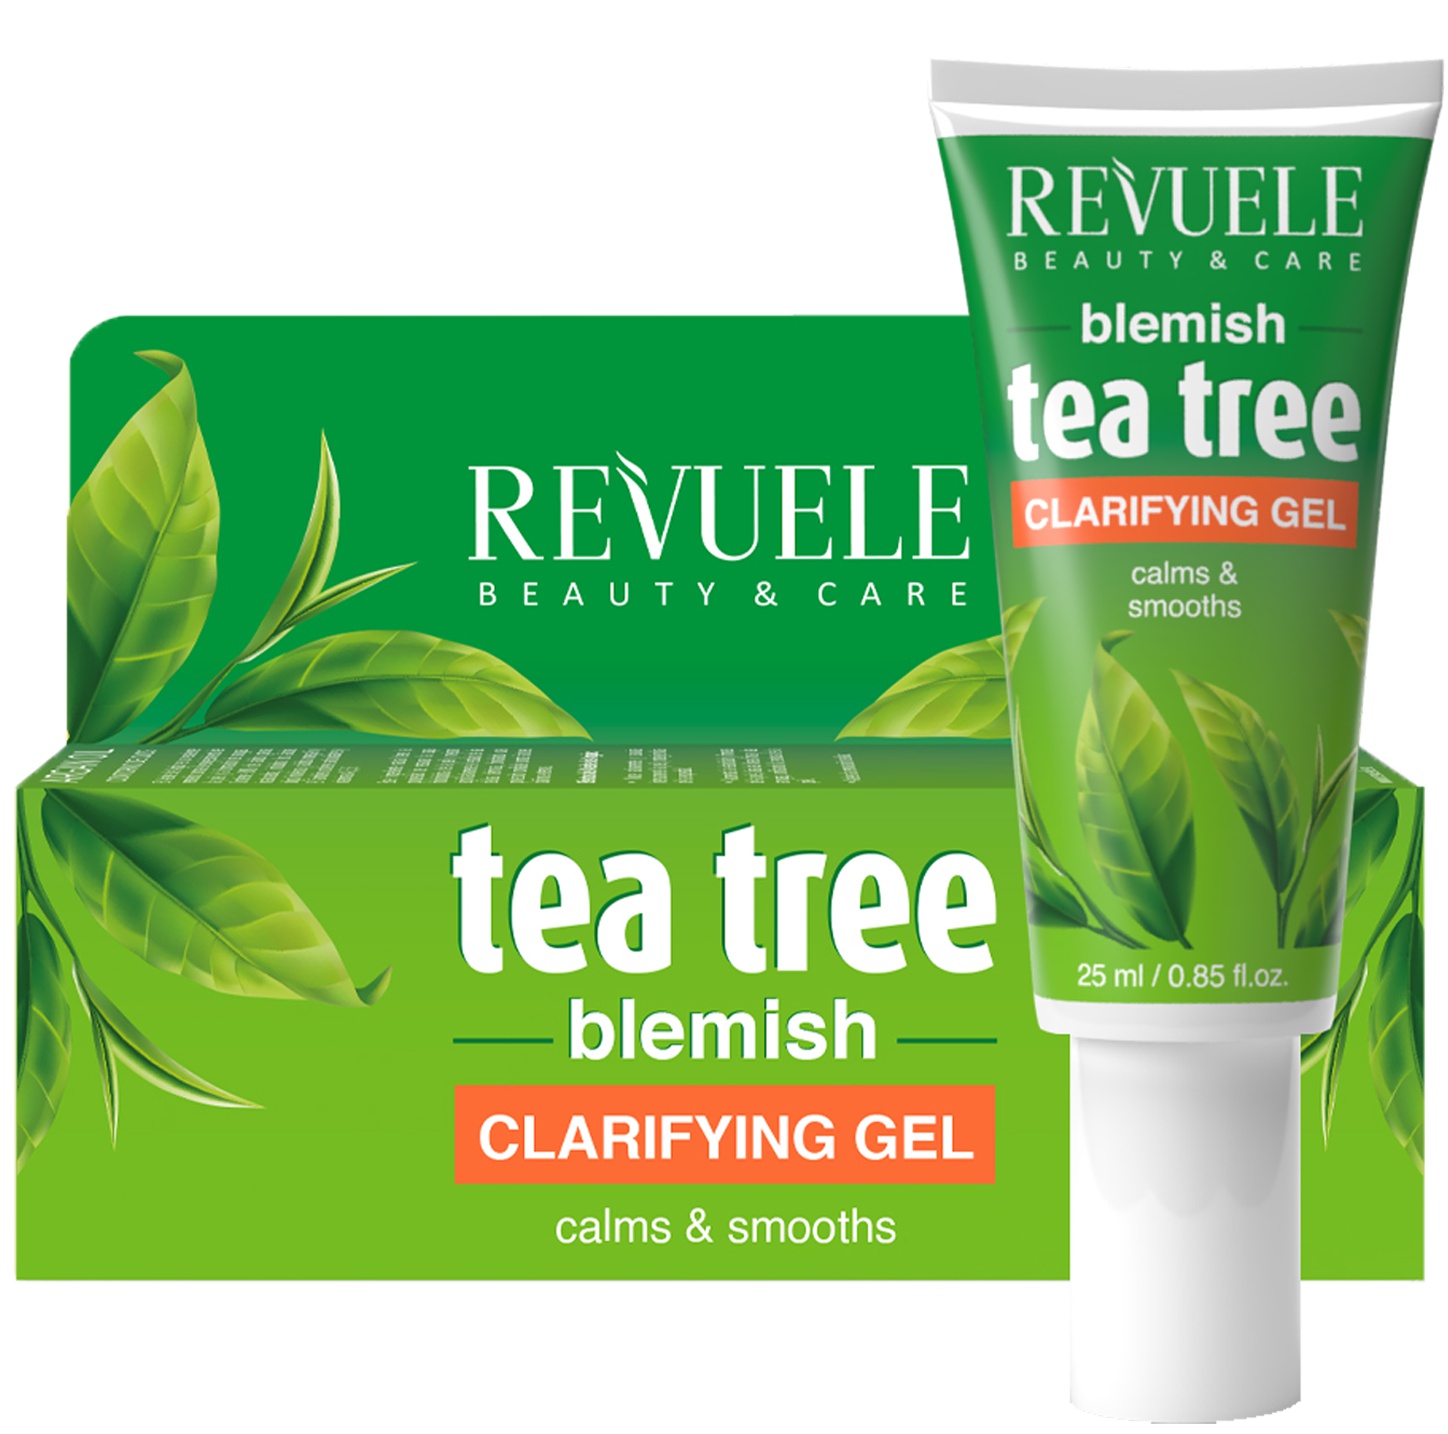 Revuele Tea Tree Blemish Clarifying Gel